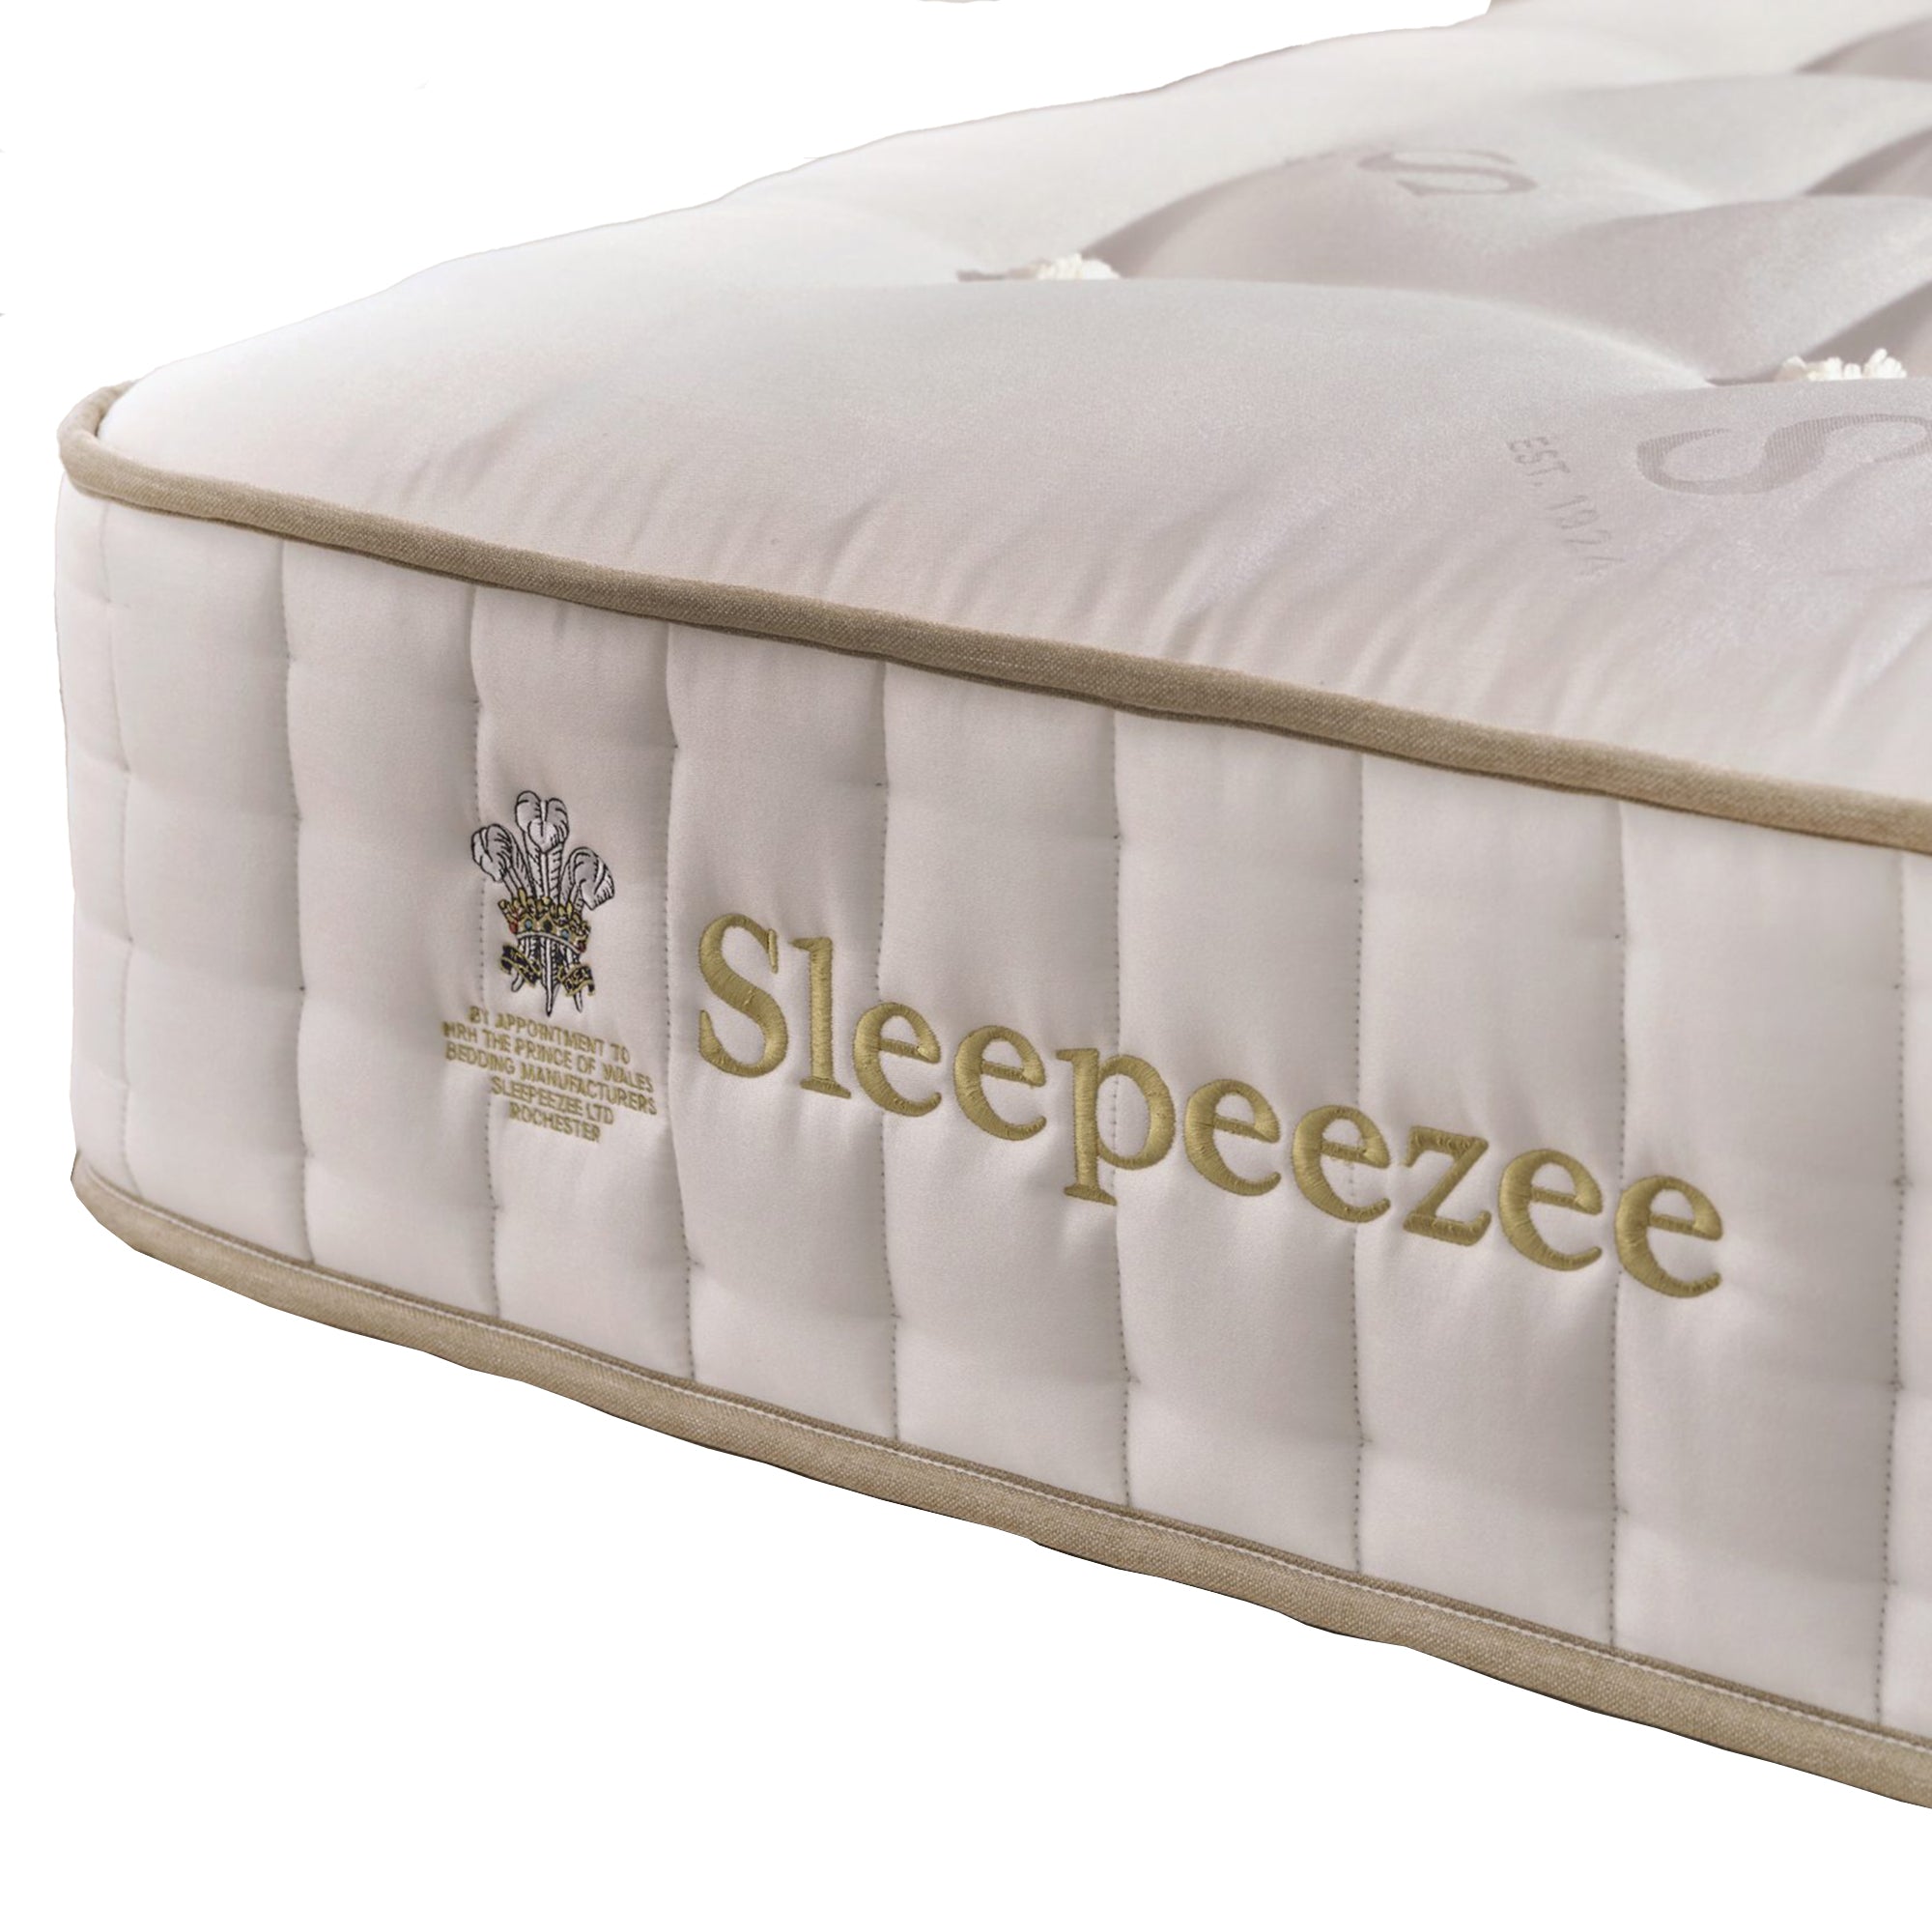 Sleepeezee Centurial 01 - Mattress 120cm (Small Double)